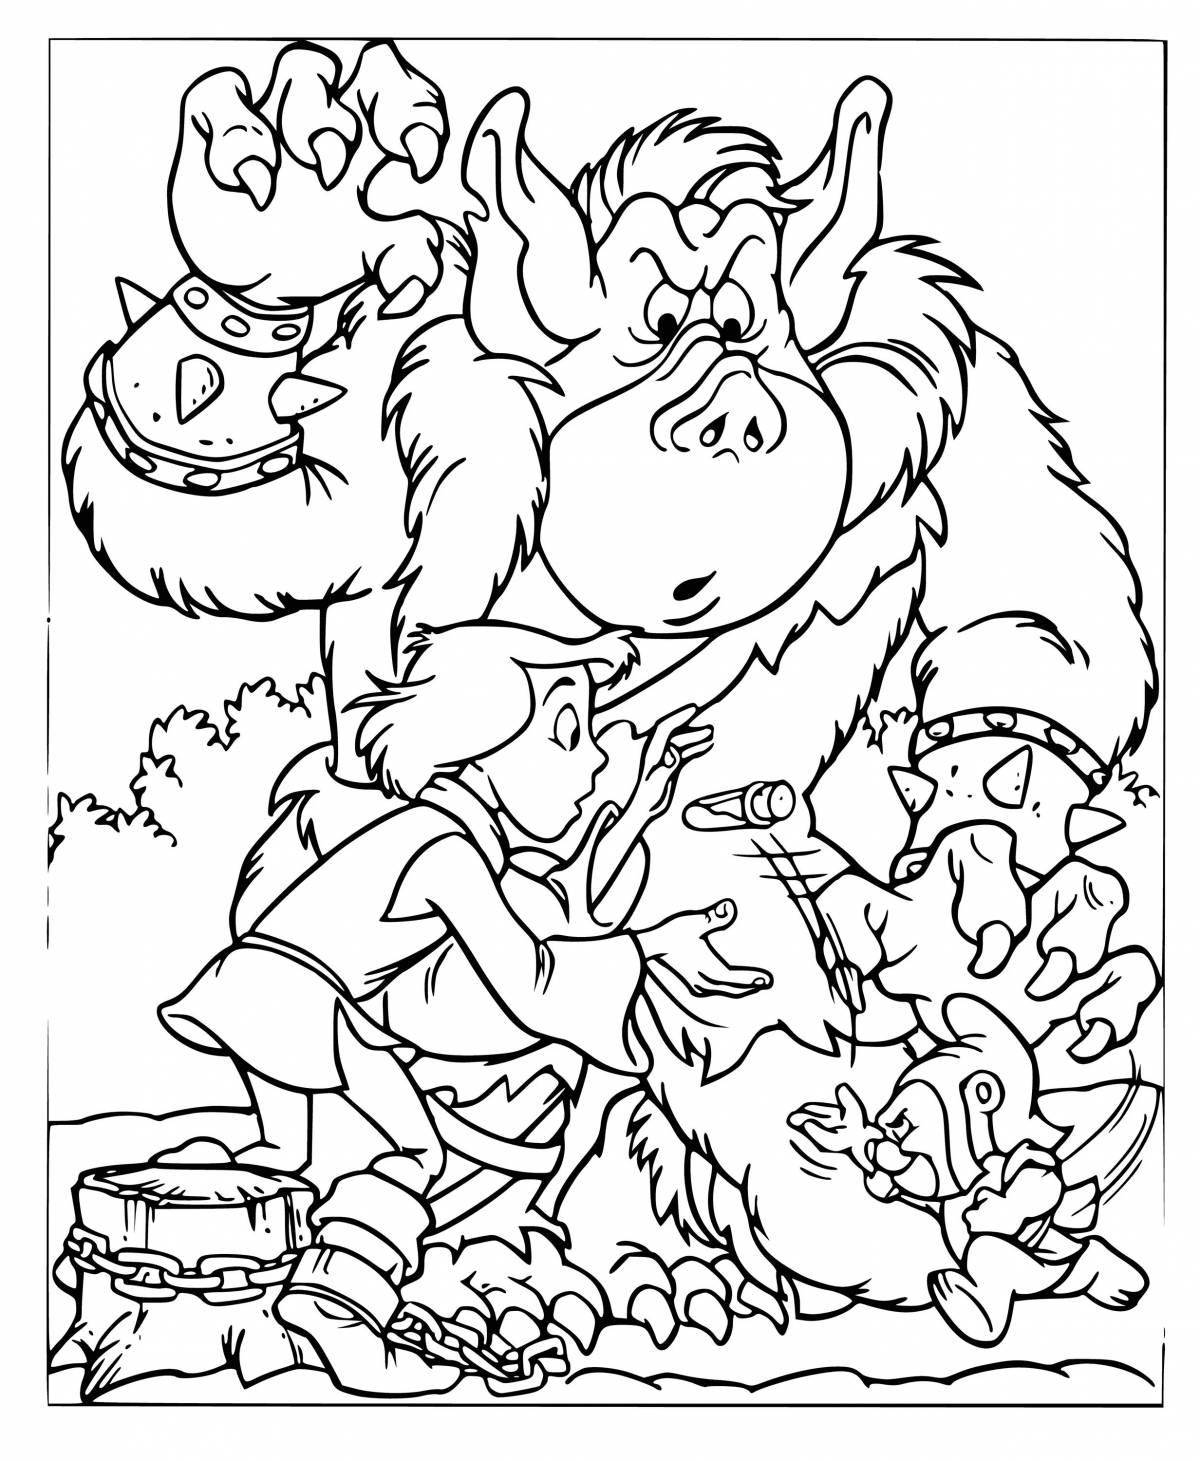 Jolly goblin coloring book for kids